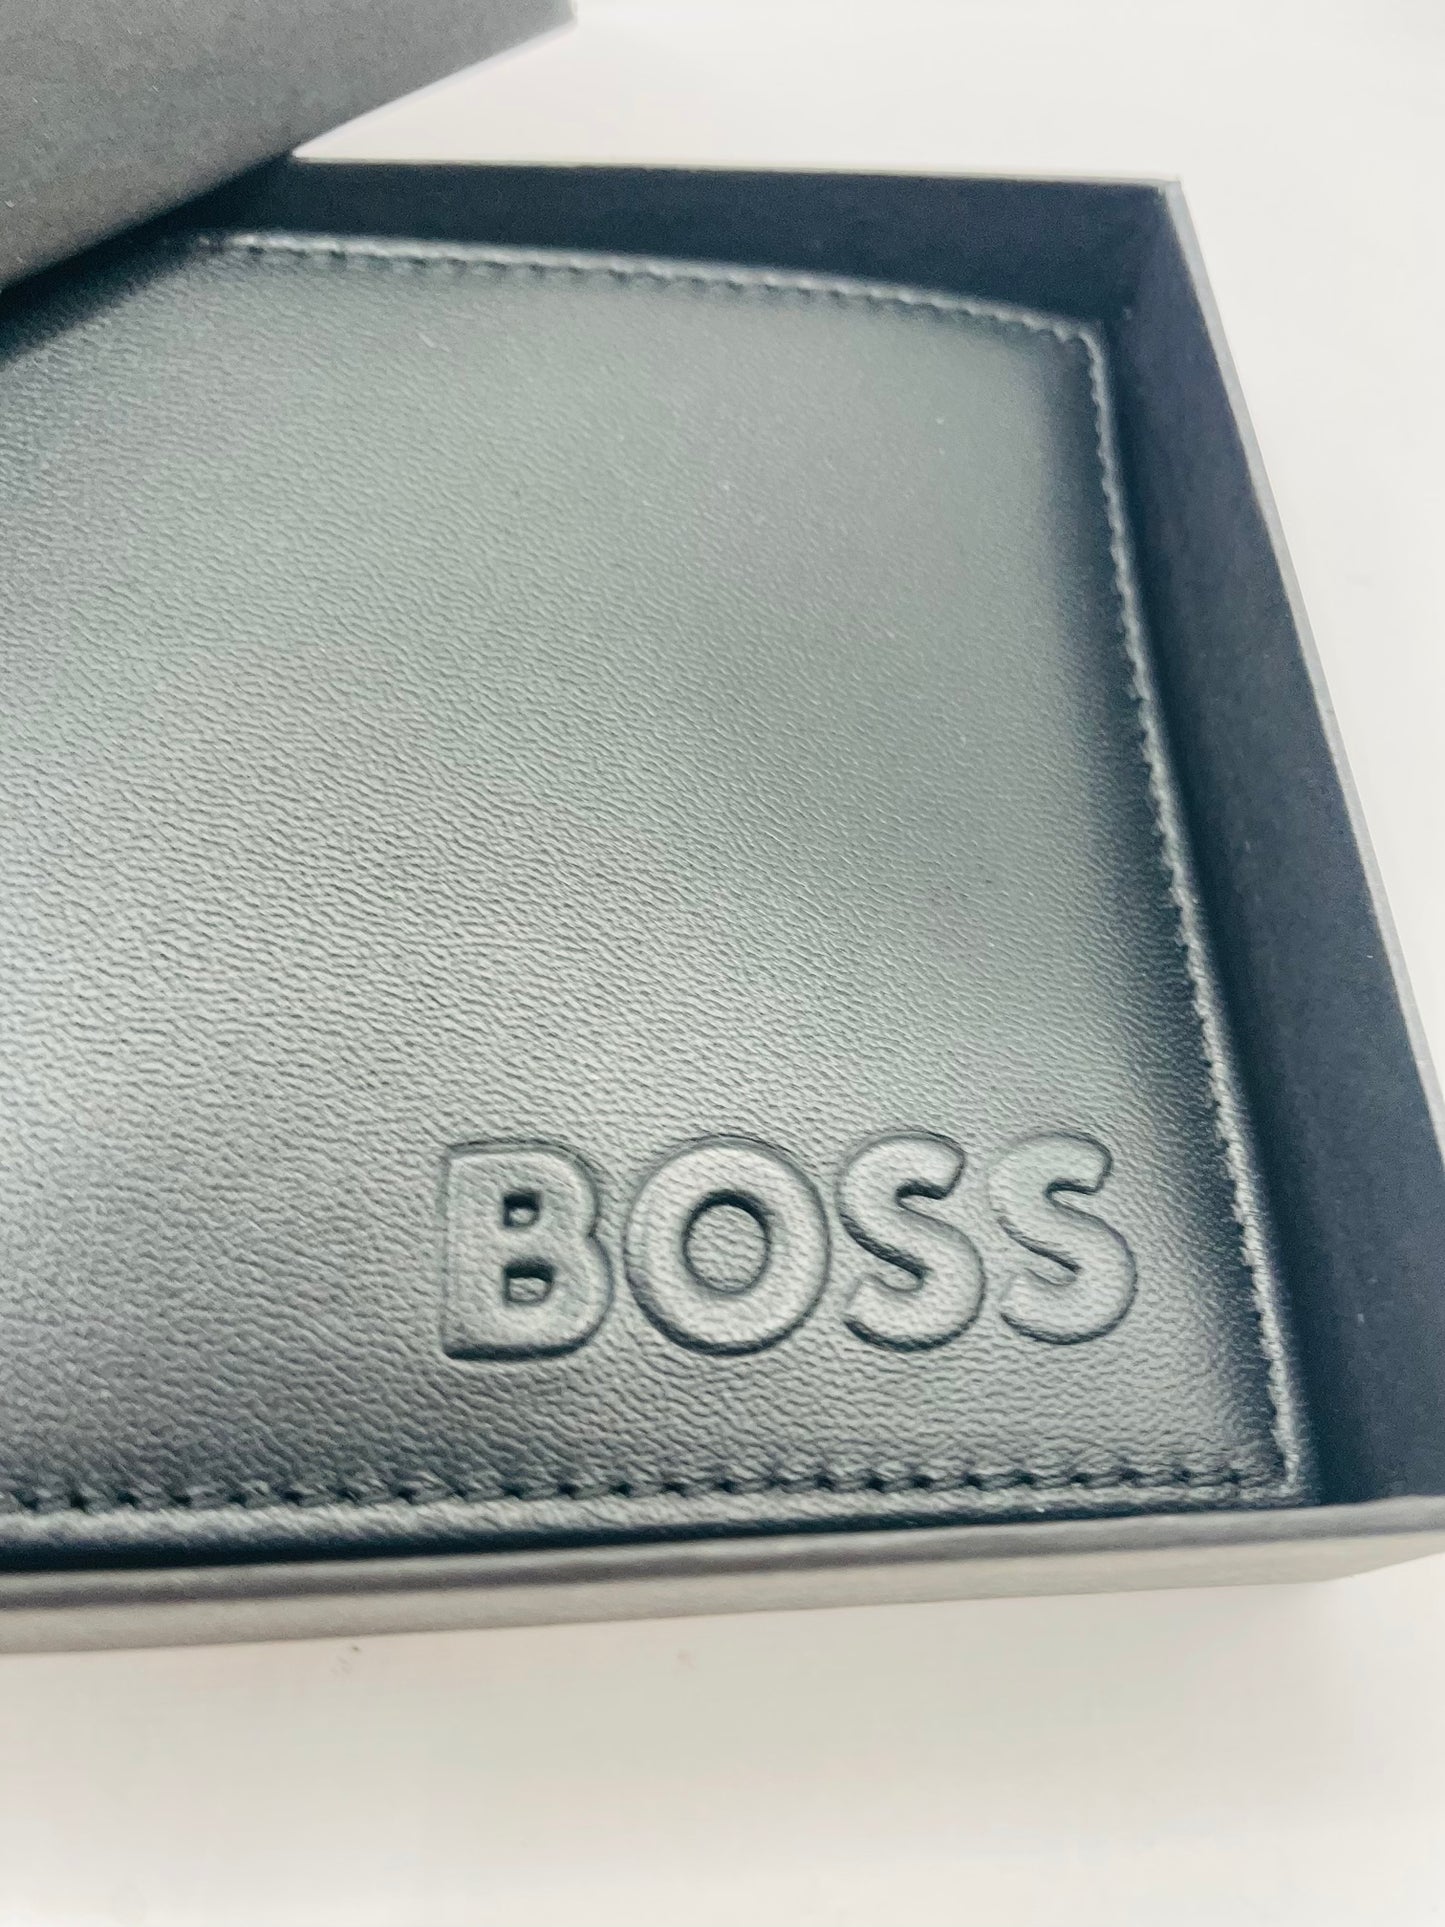 Boss men’s wallet